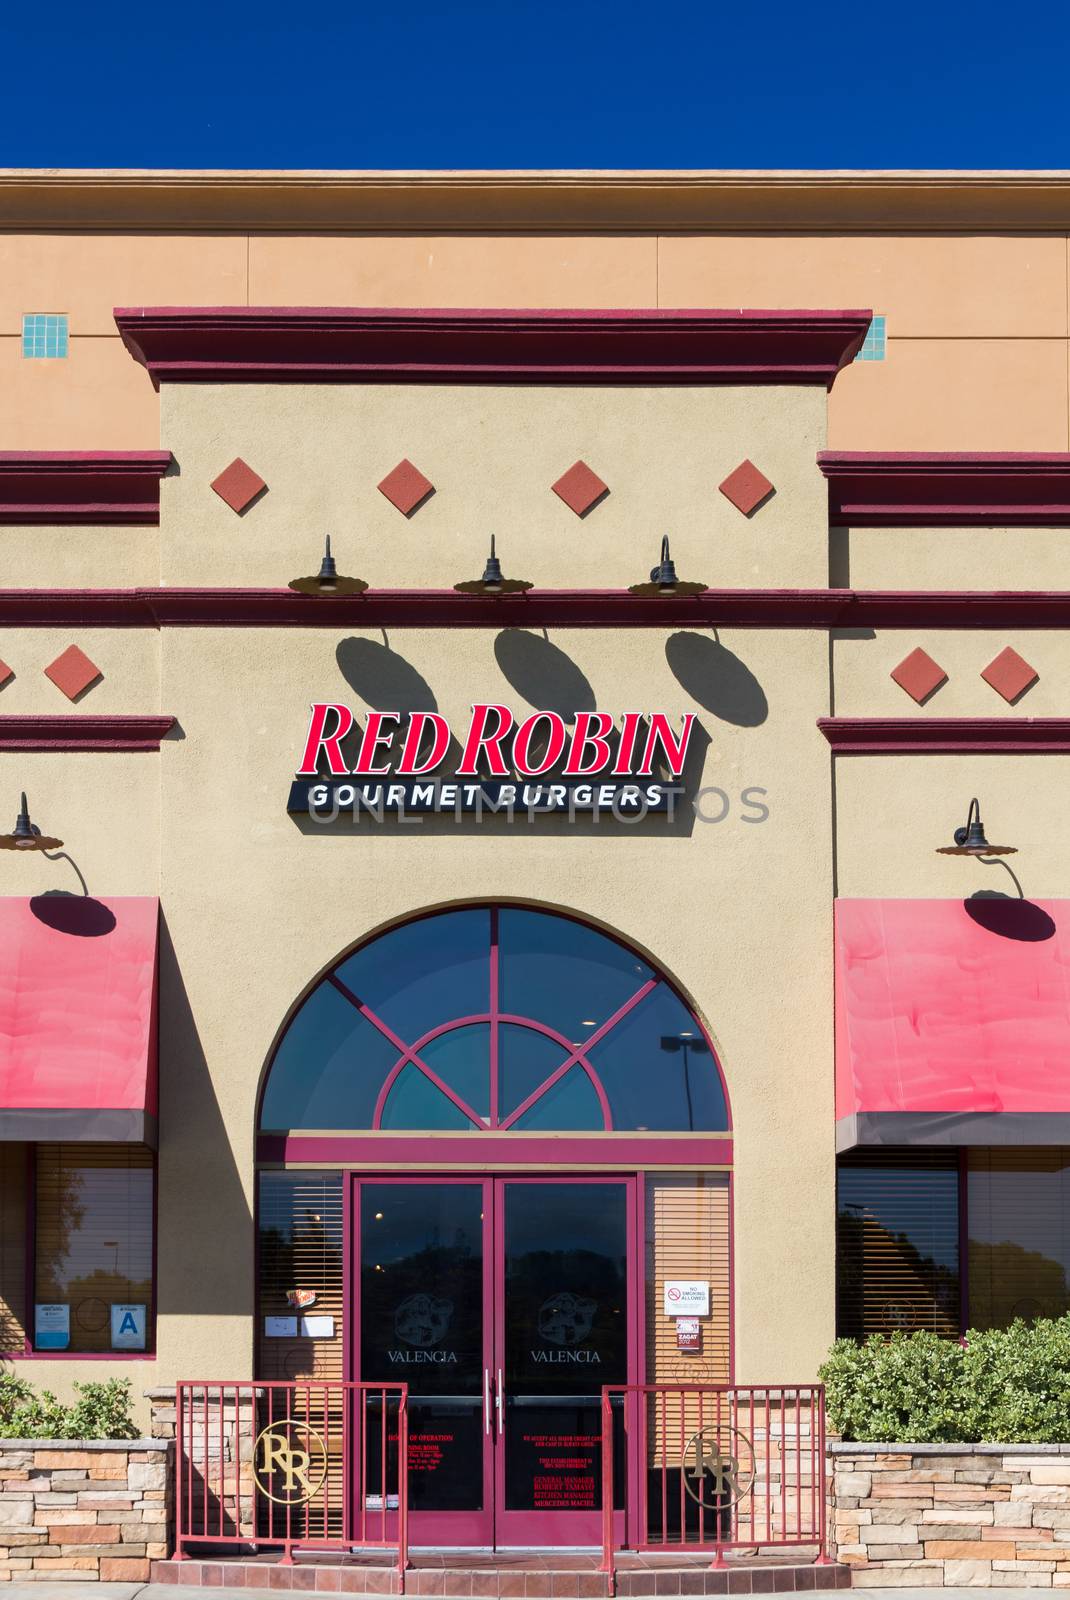 Red Robbin Gourmet Burgers Restaurant Exterior by wolterk